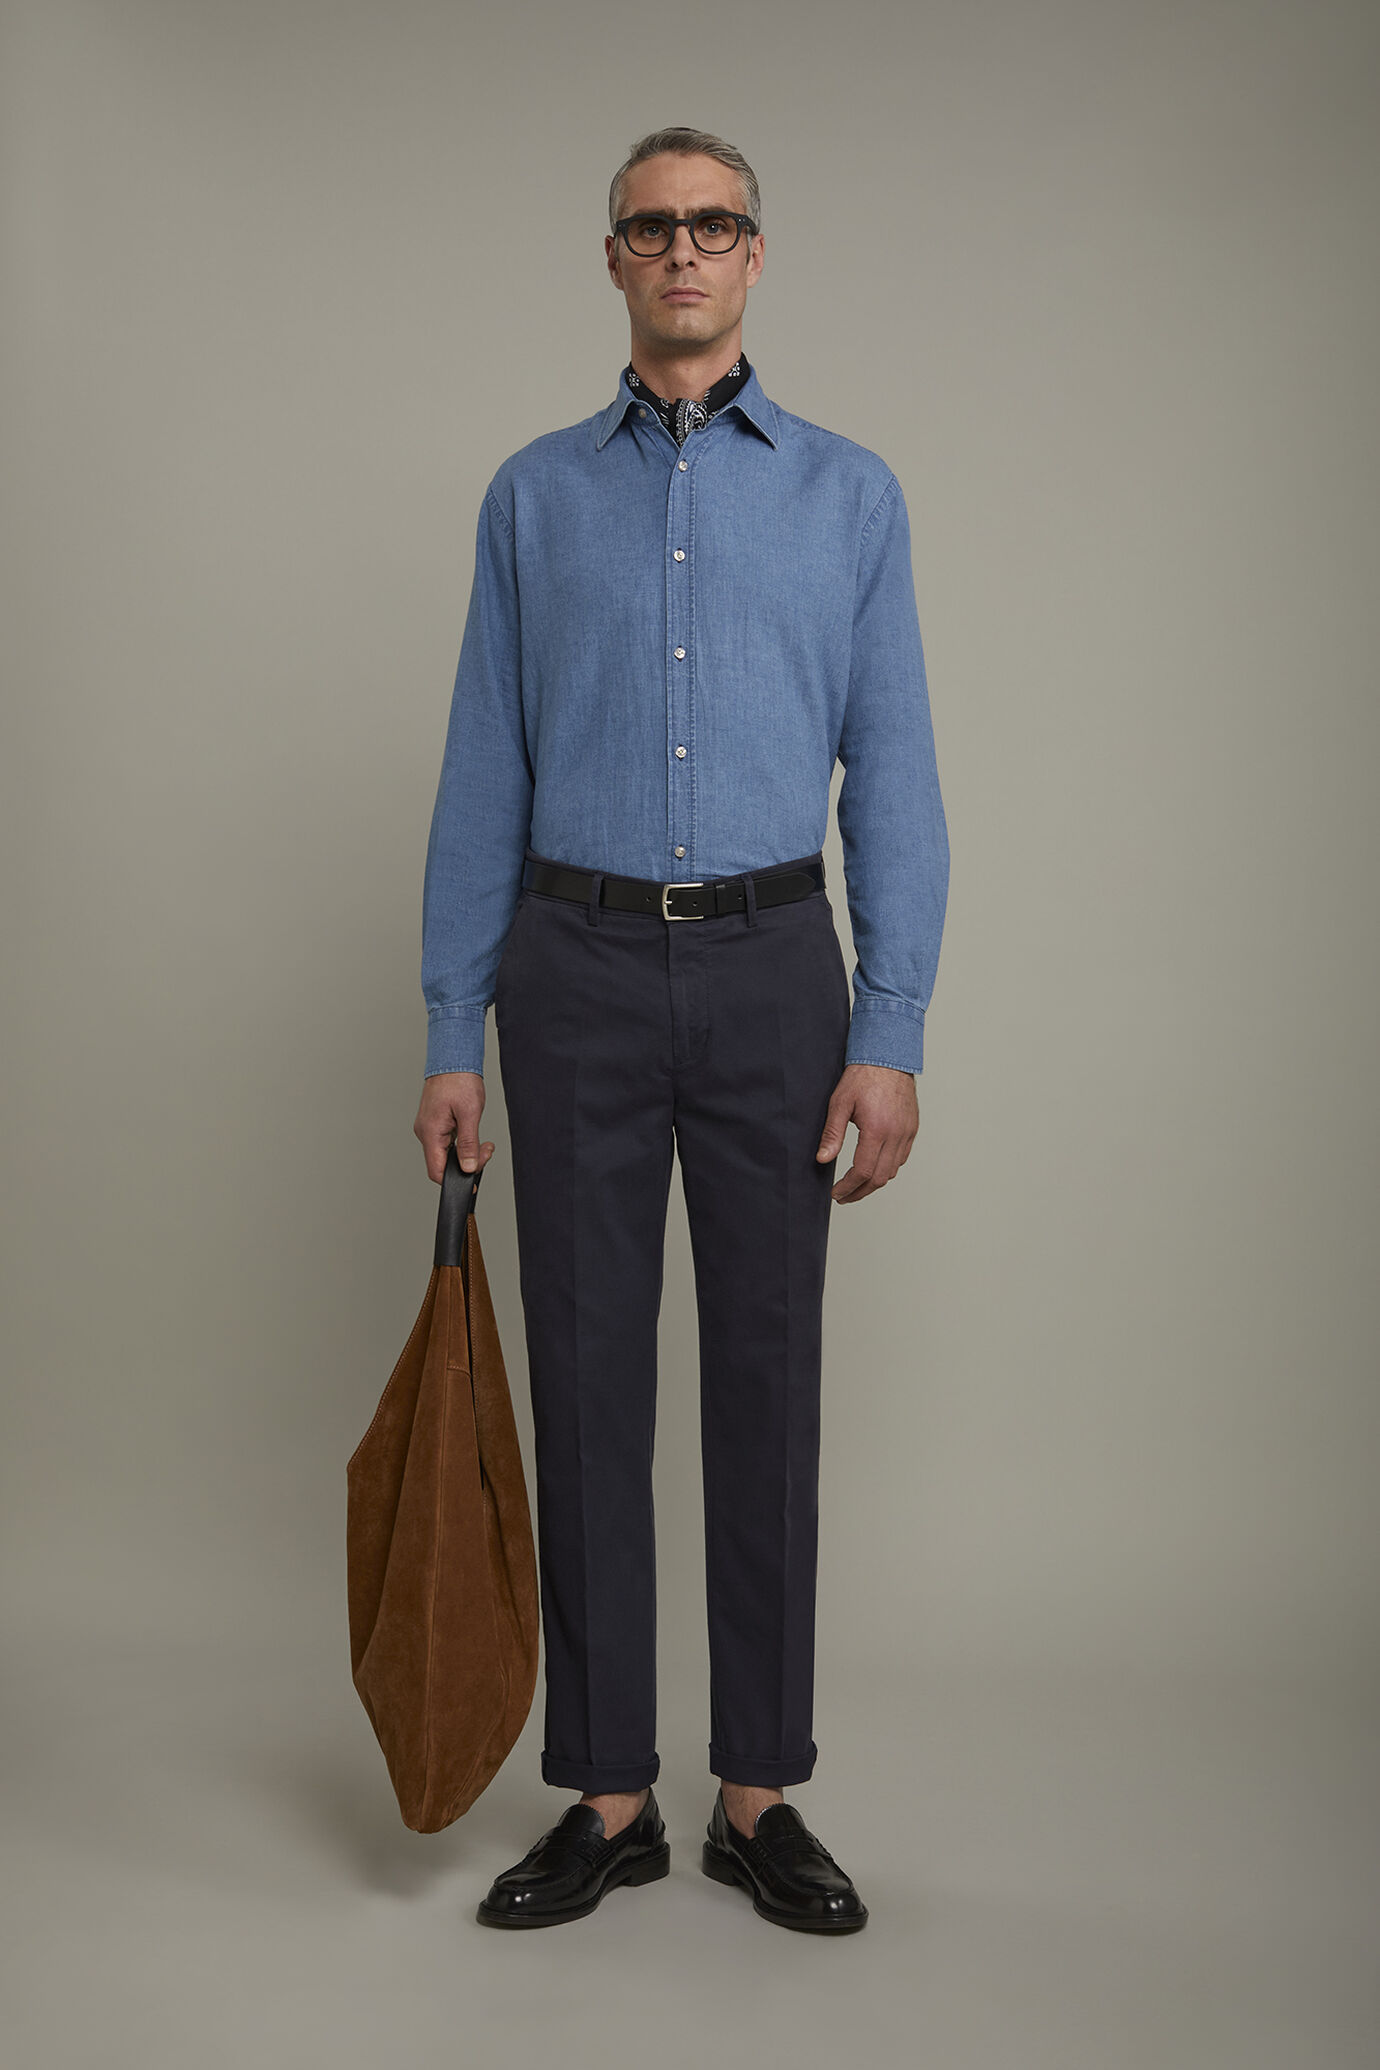 Men’s casual shirt with classic collar linen and pied de poule cotton comfort fit